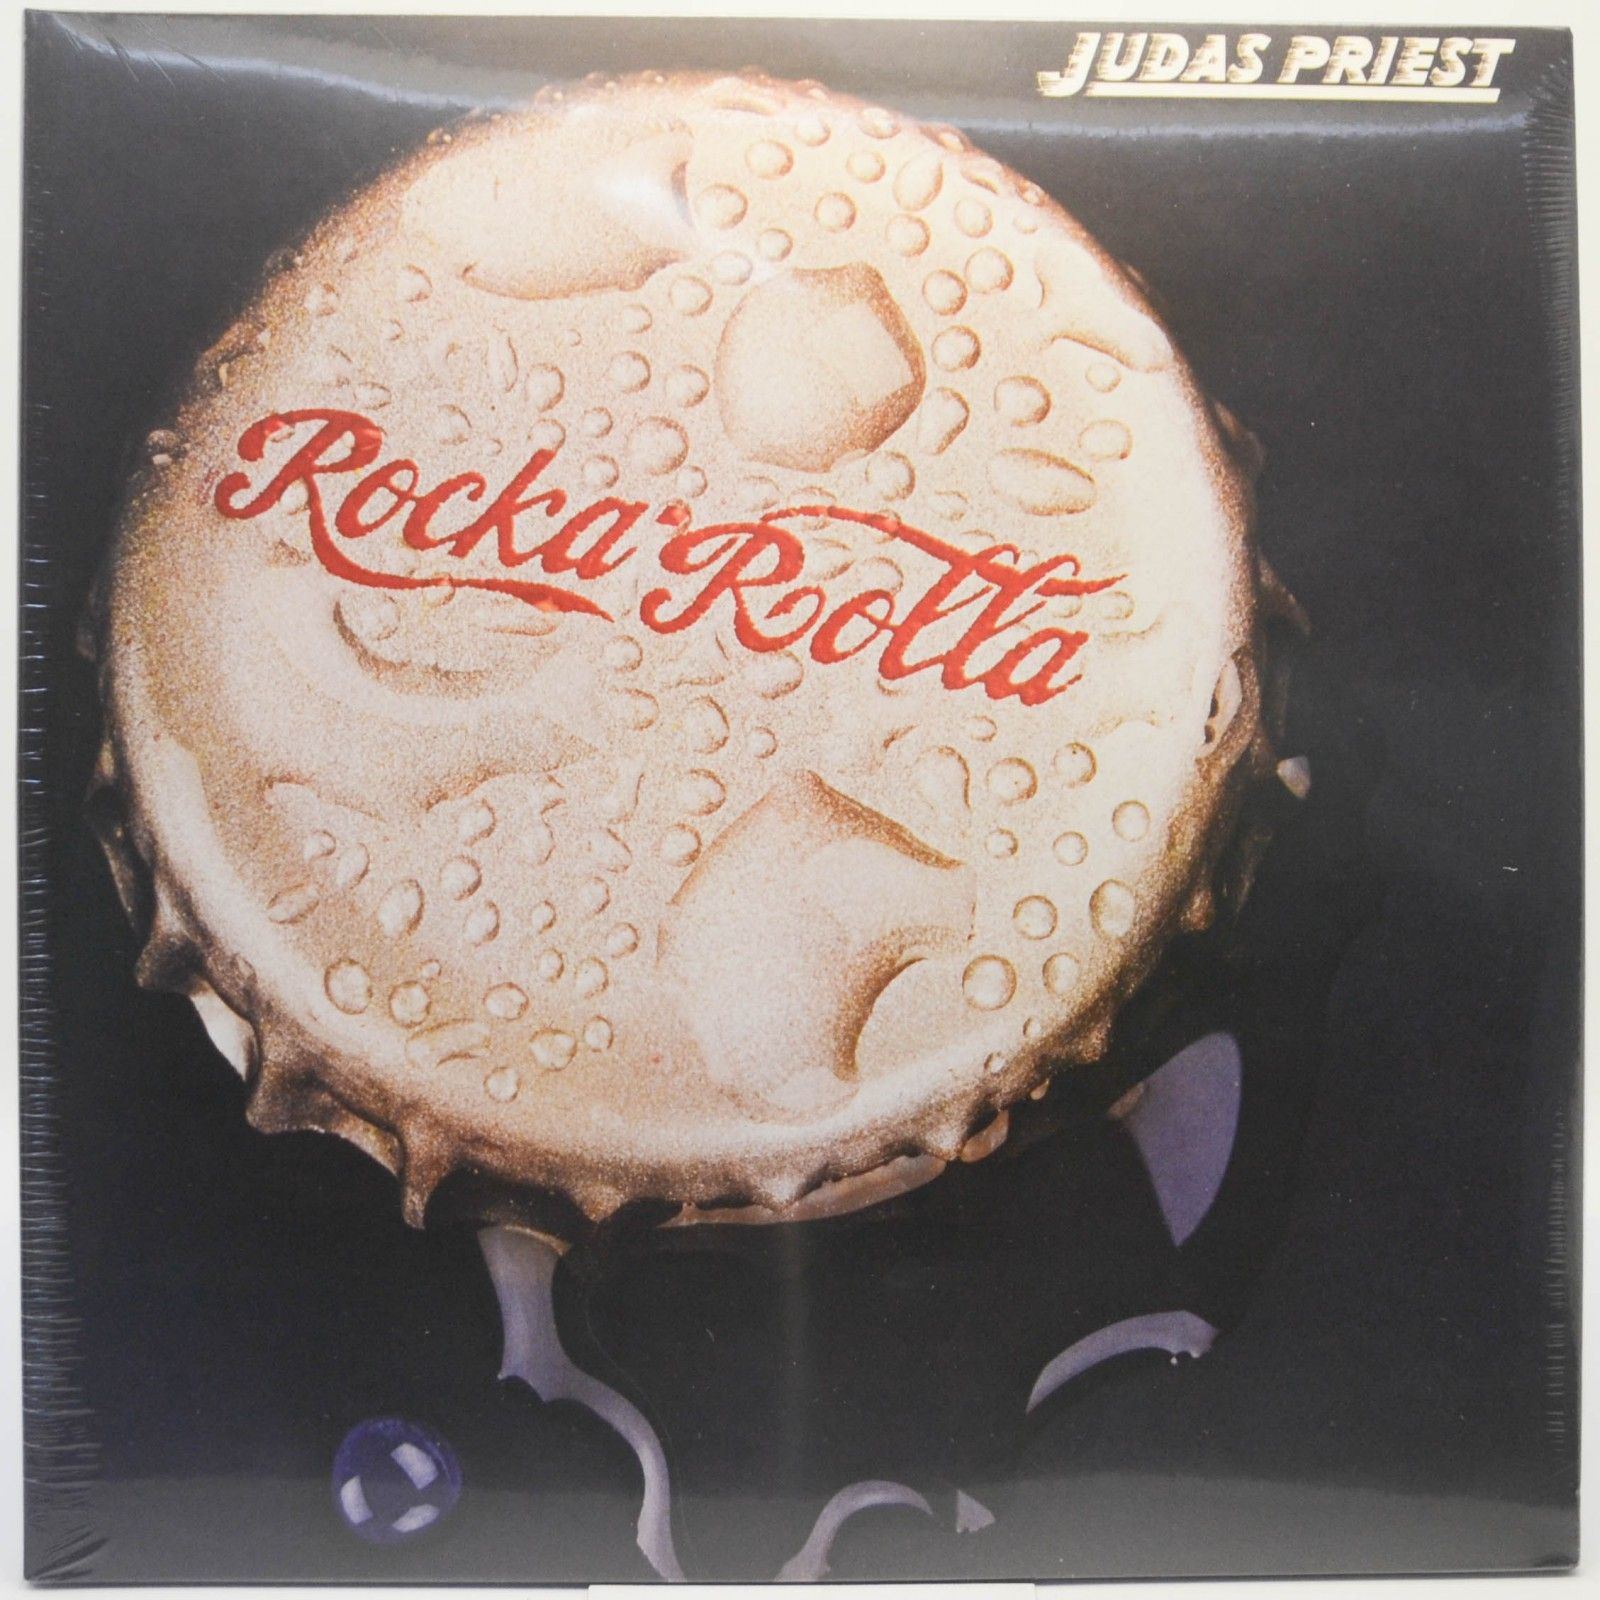 Judas Priest — Rocka Rolla (UK), 1974